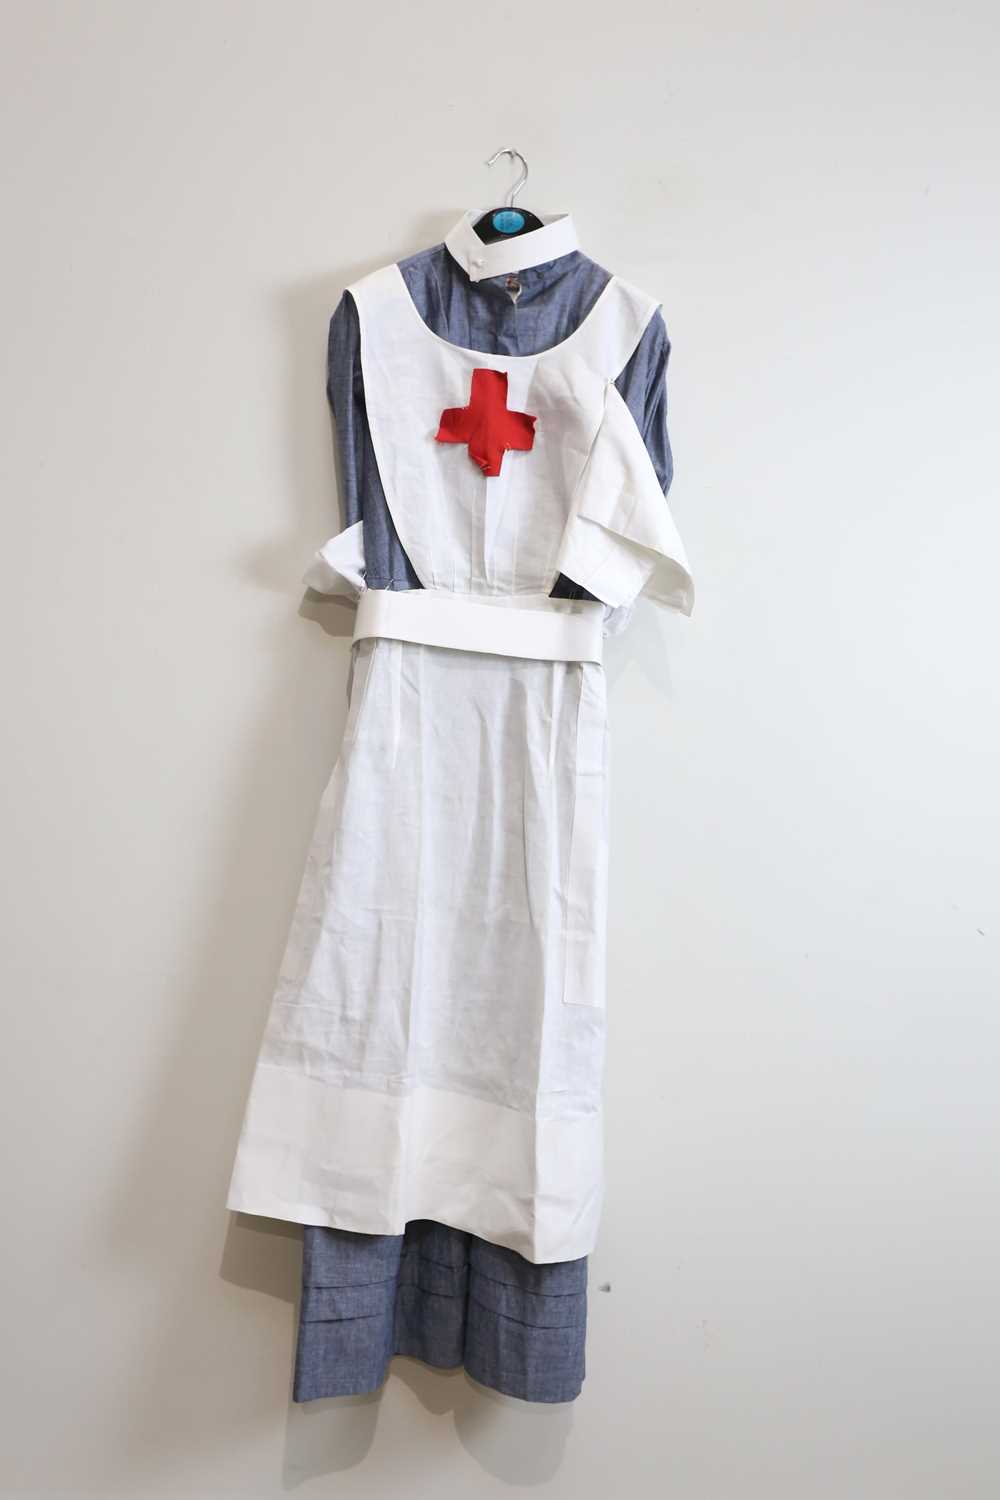 A WWI Garrough full nurse's uniform.